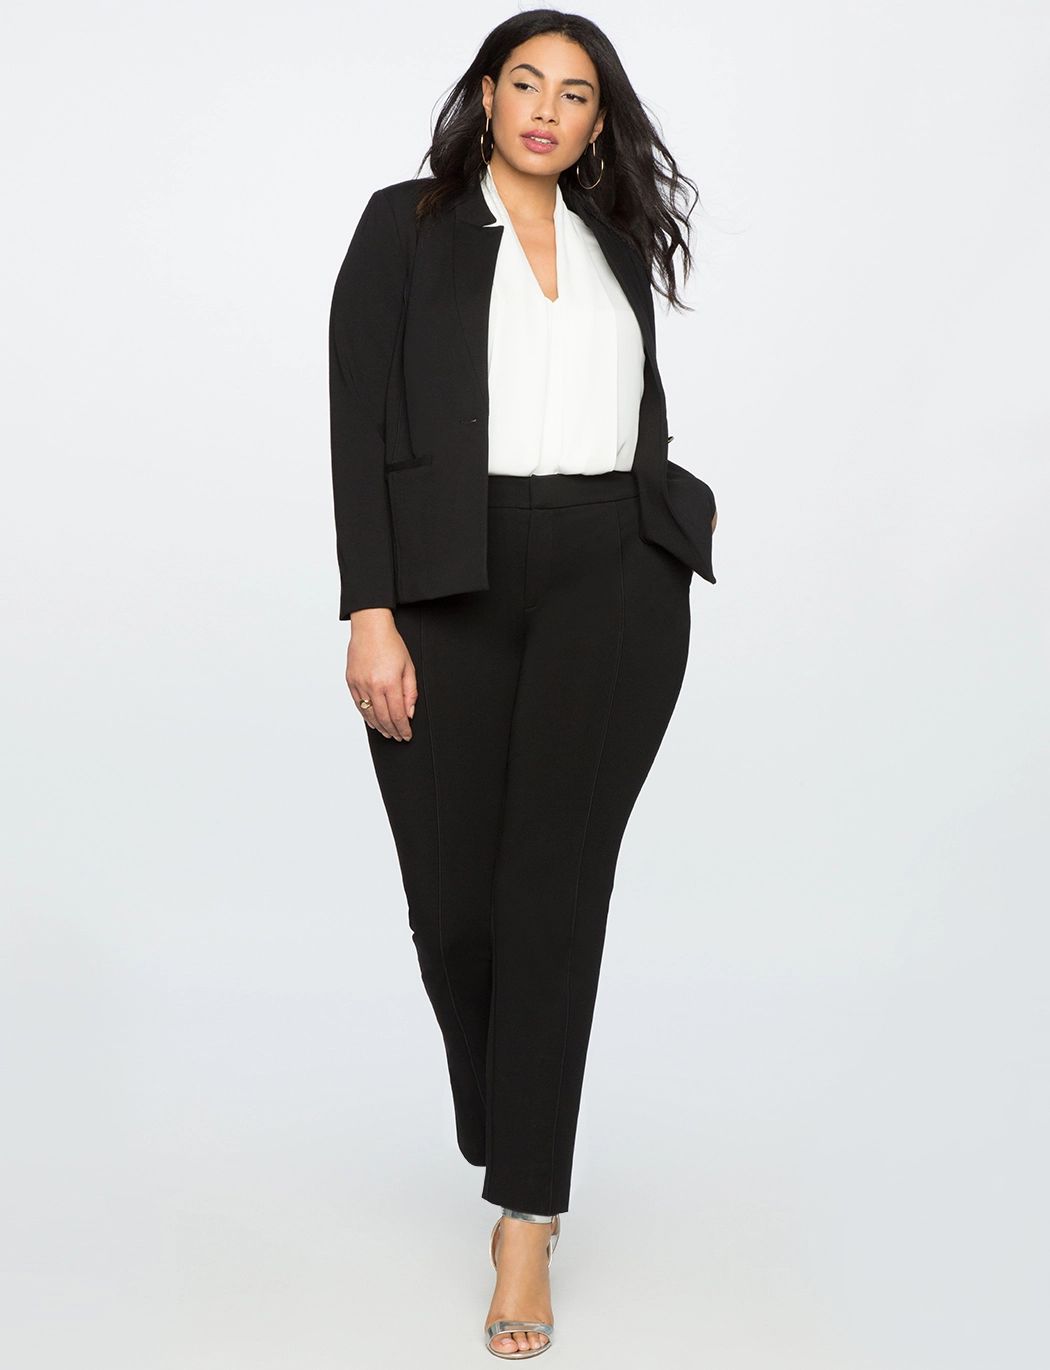 The Ultimate Suit Pintuck Pant | Women's Plus Size Pants | ELOQUII | Eloquii